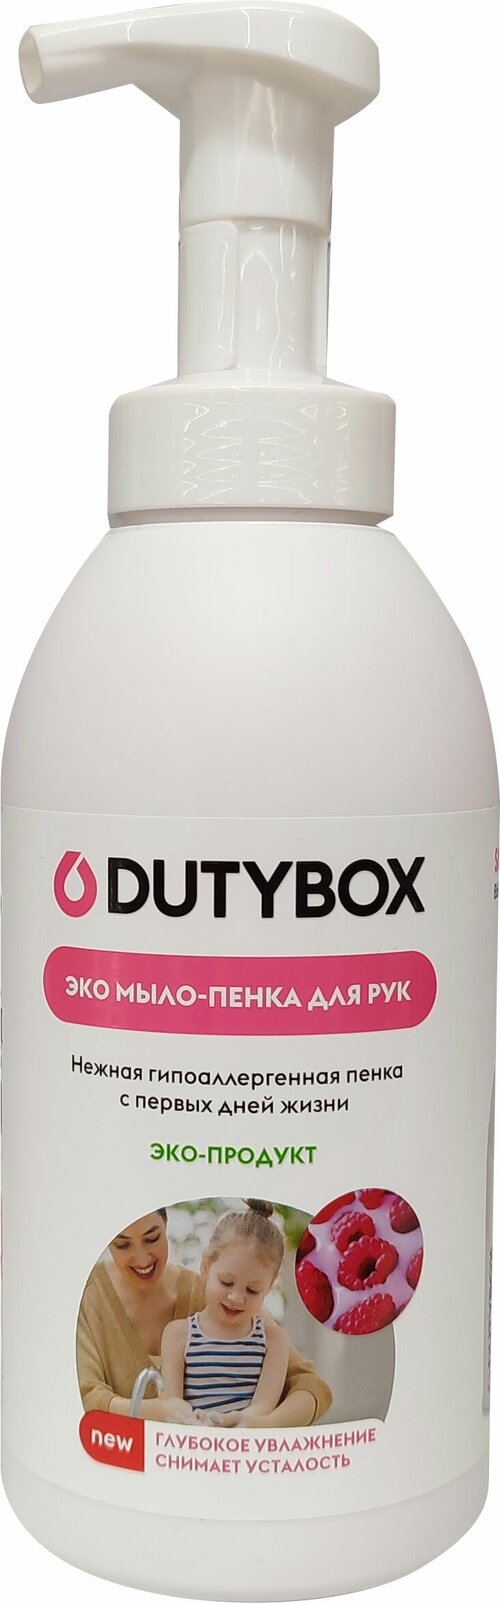 DUTYBOX Мыло-пенка для рук 500 мл с ароматом Малины в сливках